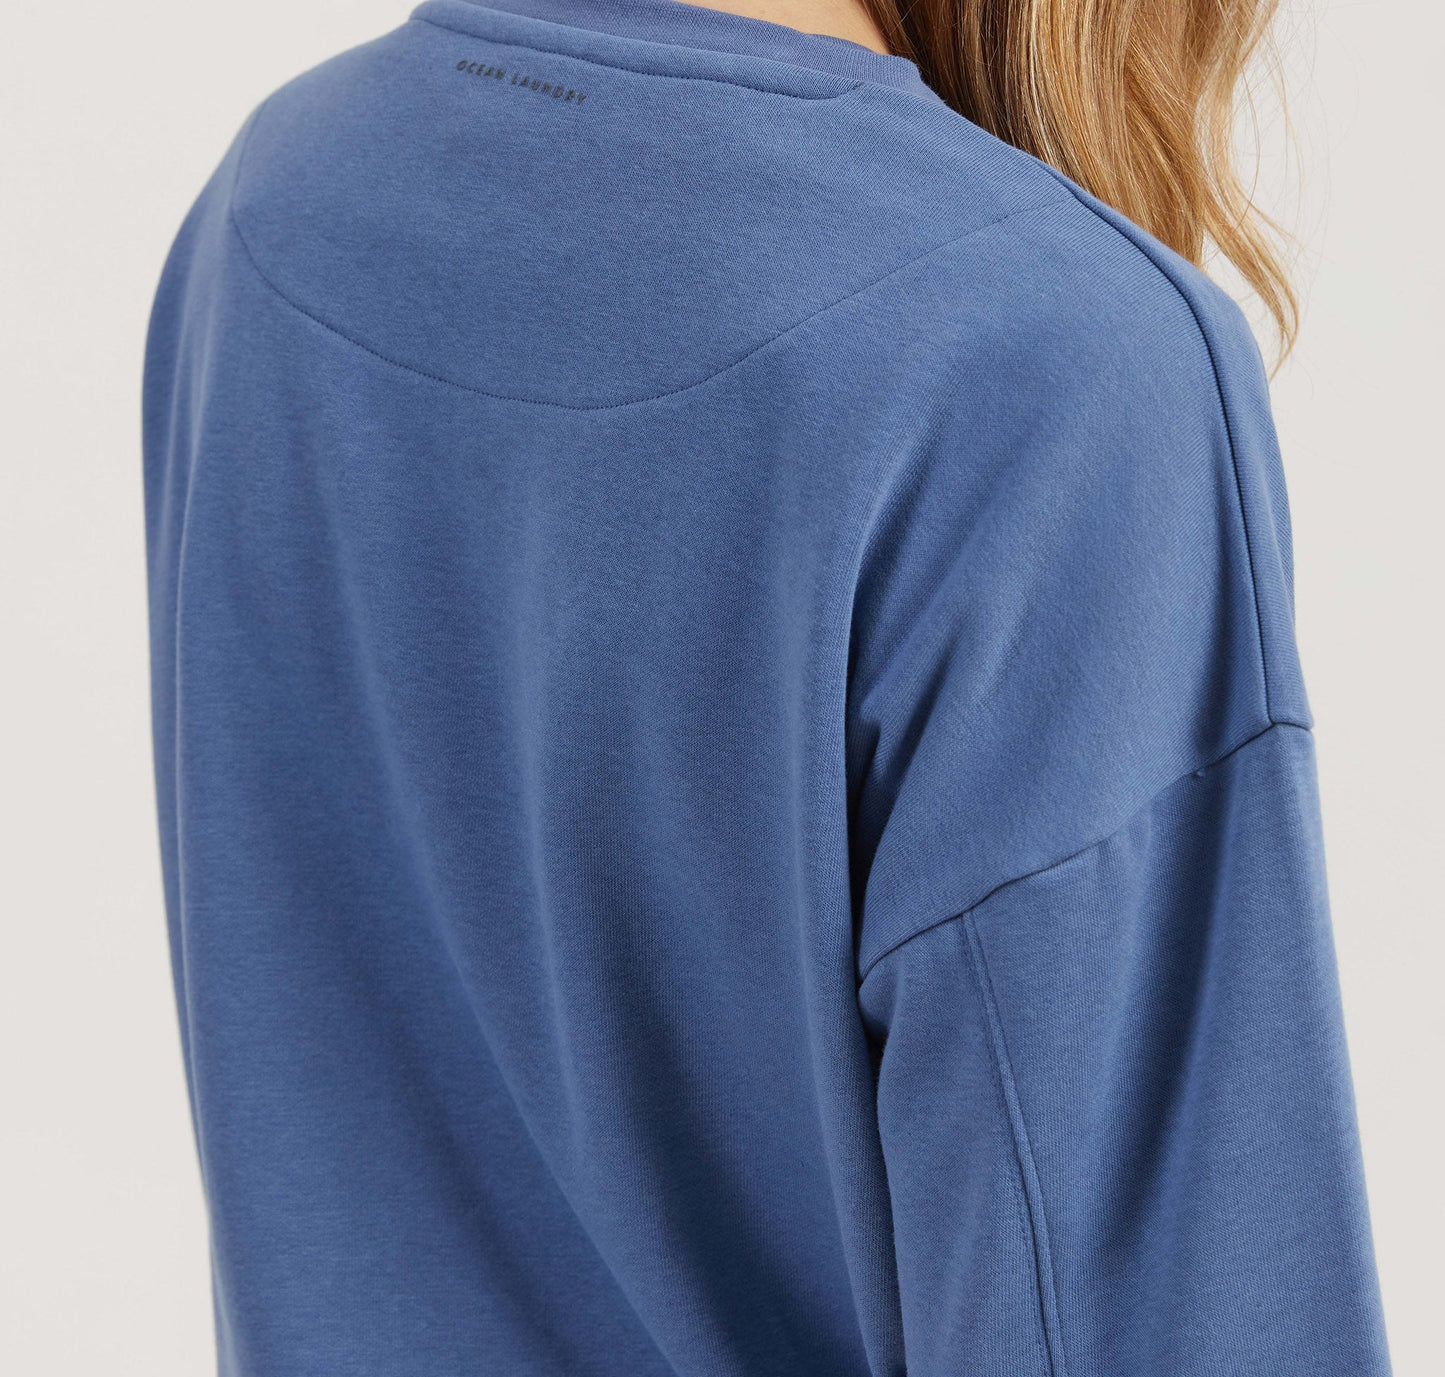 Lotus Sweatshirt for Women - Moonlight Blue